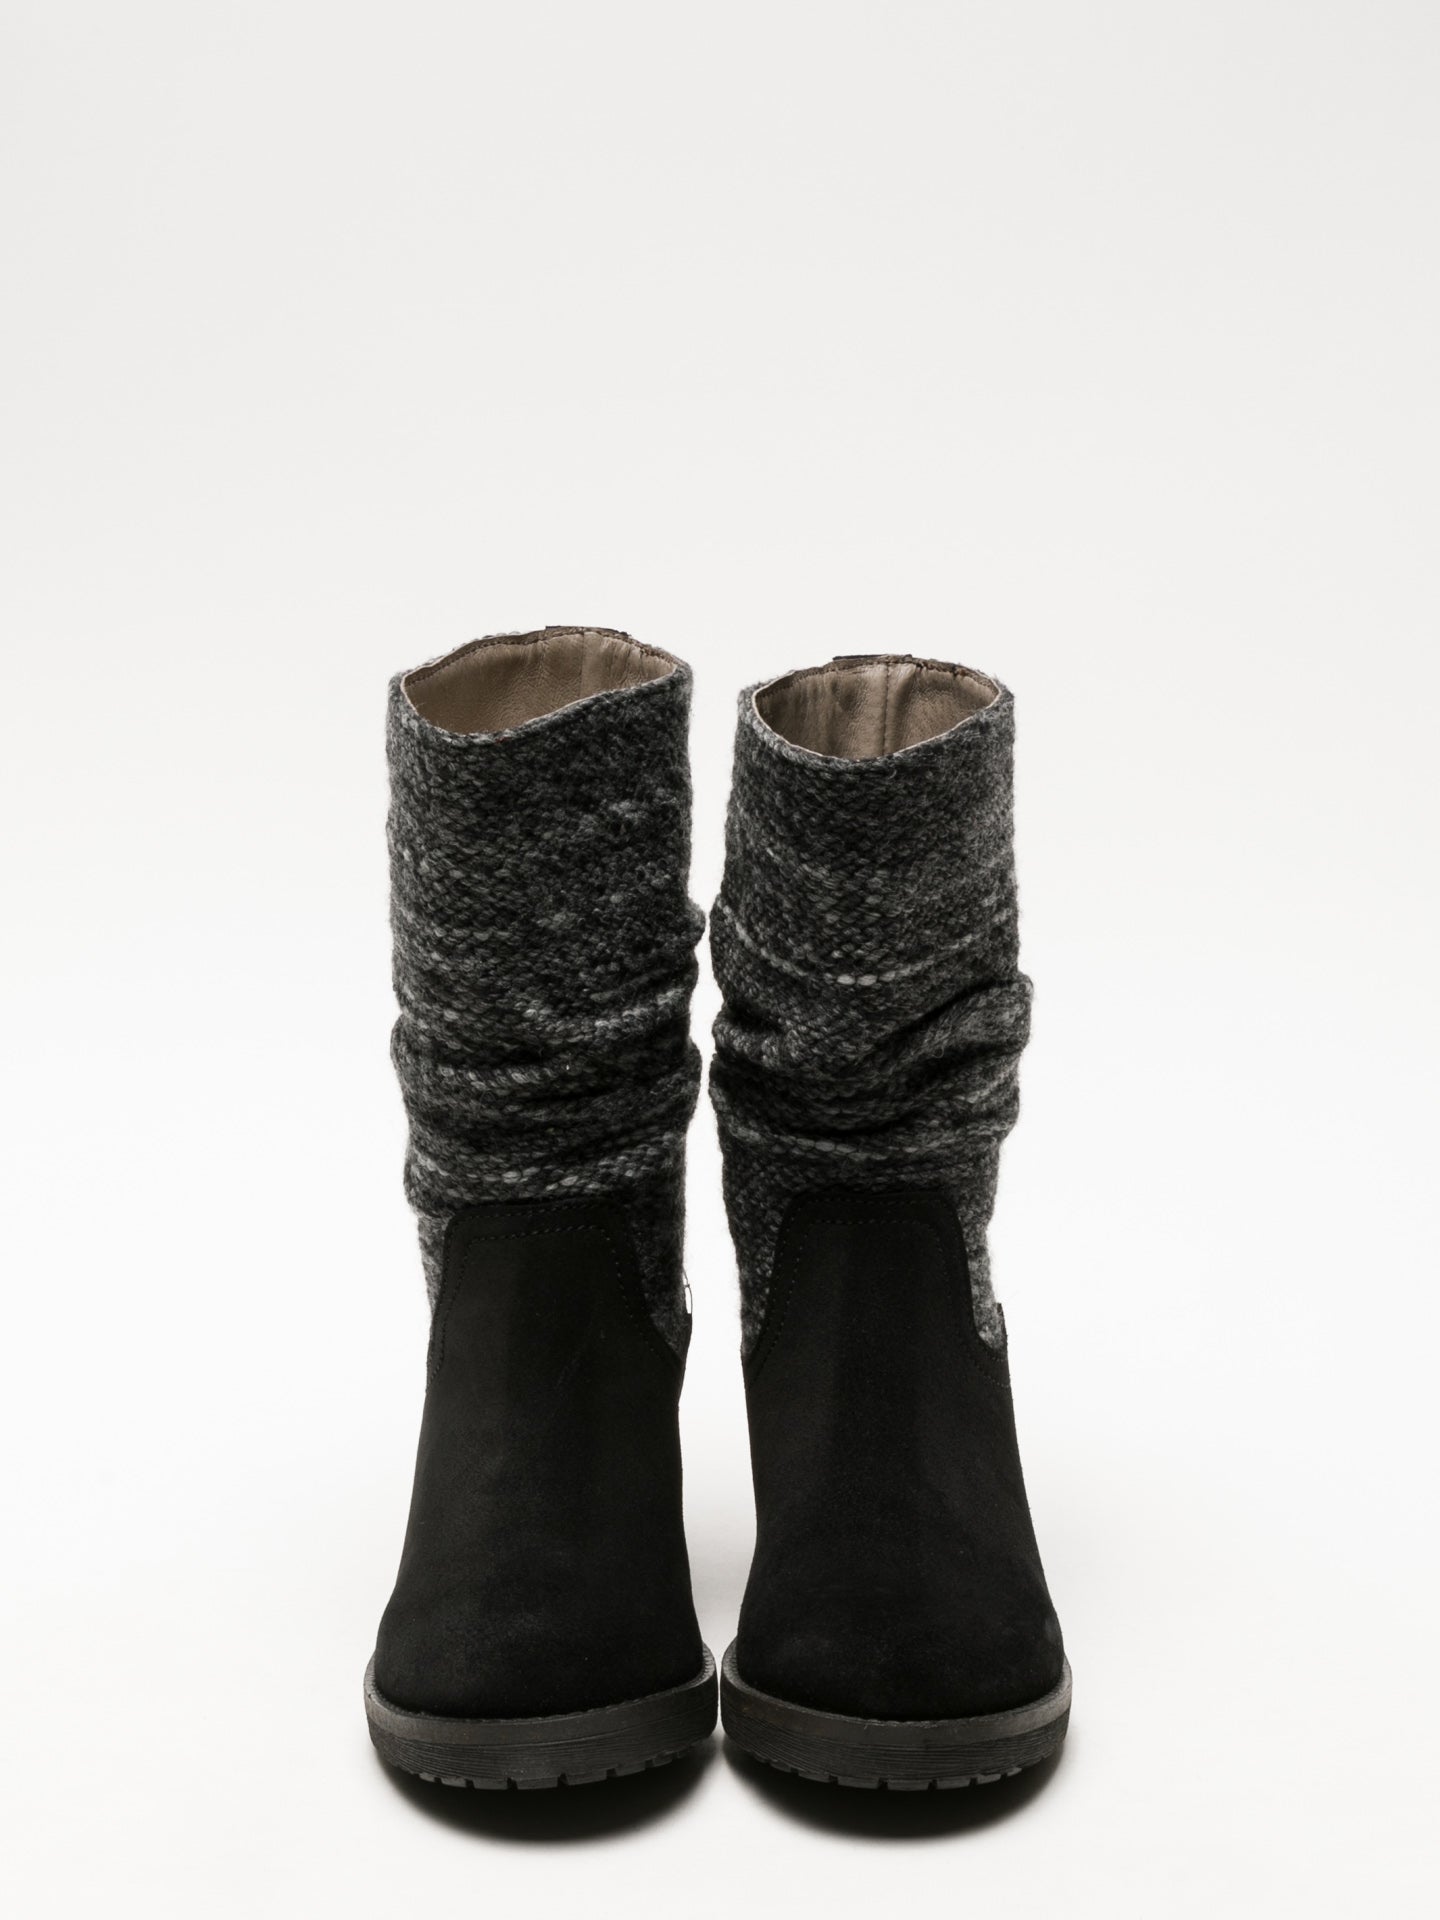 Foreva Black Round Toe Boots